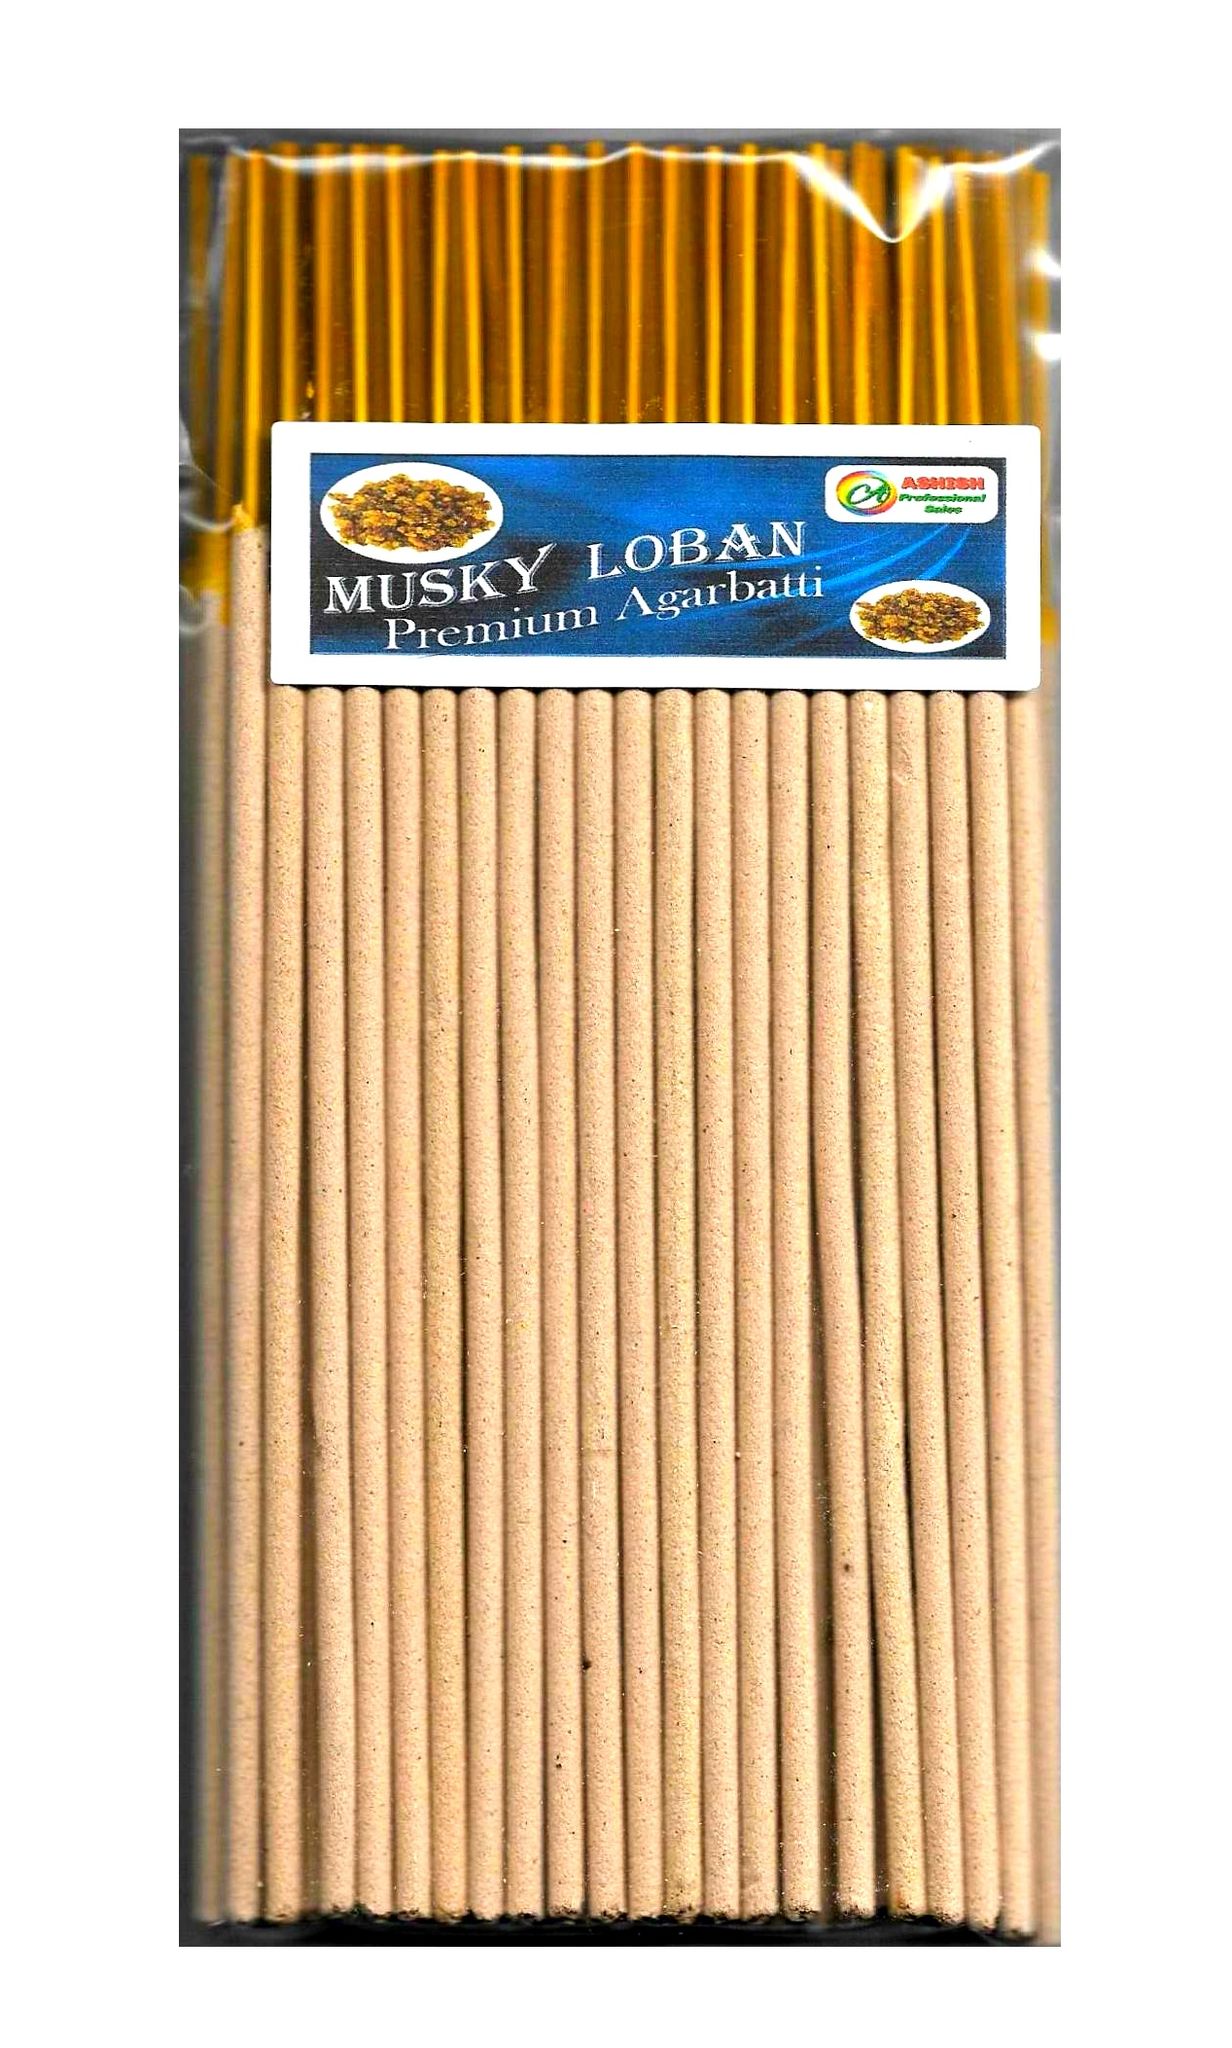 Premium Musky Loban Agarbatti Incense Sticks by Ashish Professional Sales, 200 gm